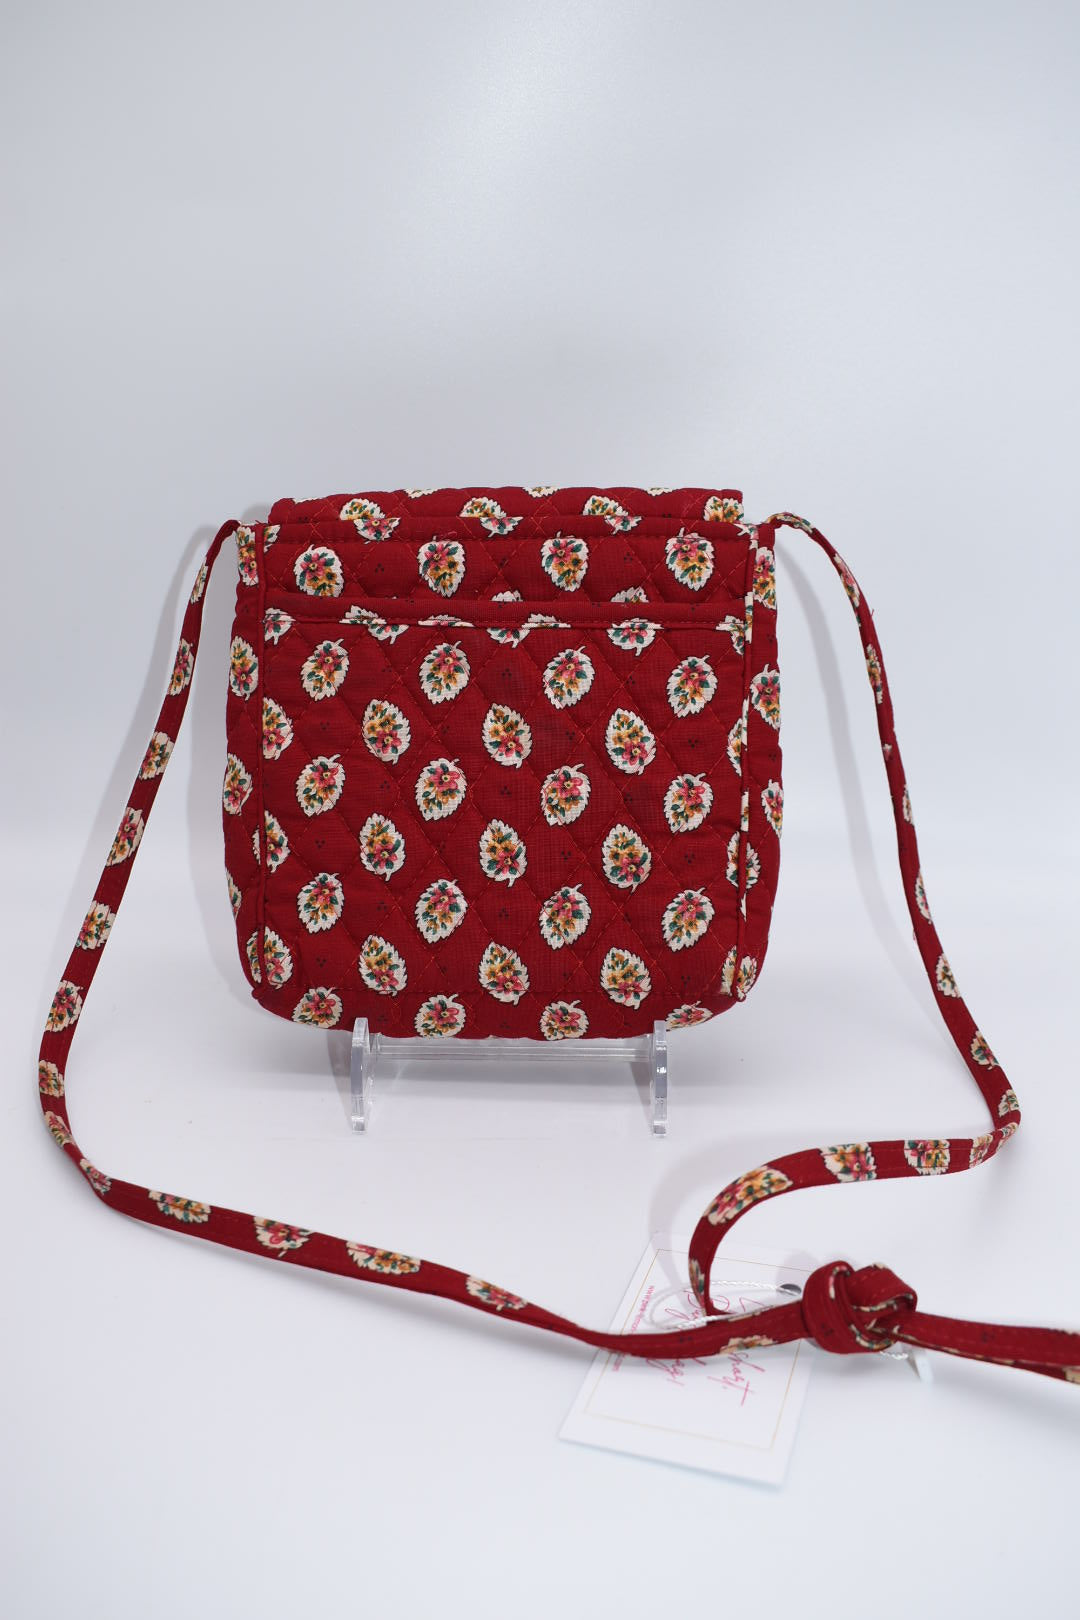 Vera Bradley Vintage Small Crossbody Bag in "Red Leaf" Pattern